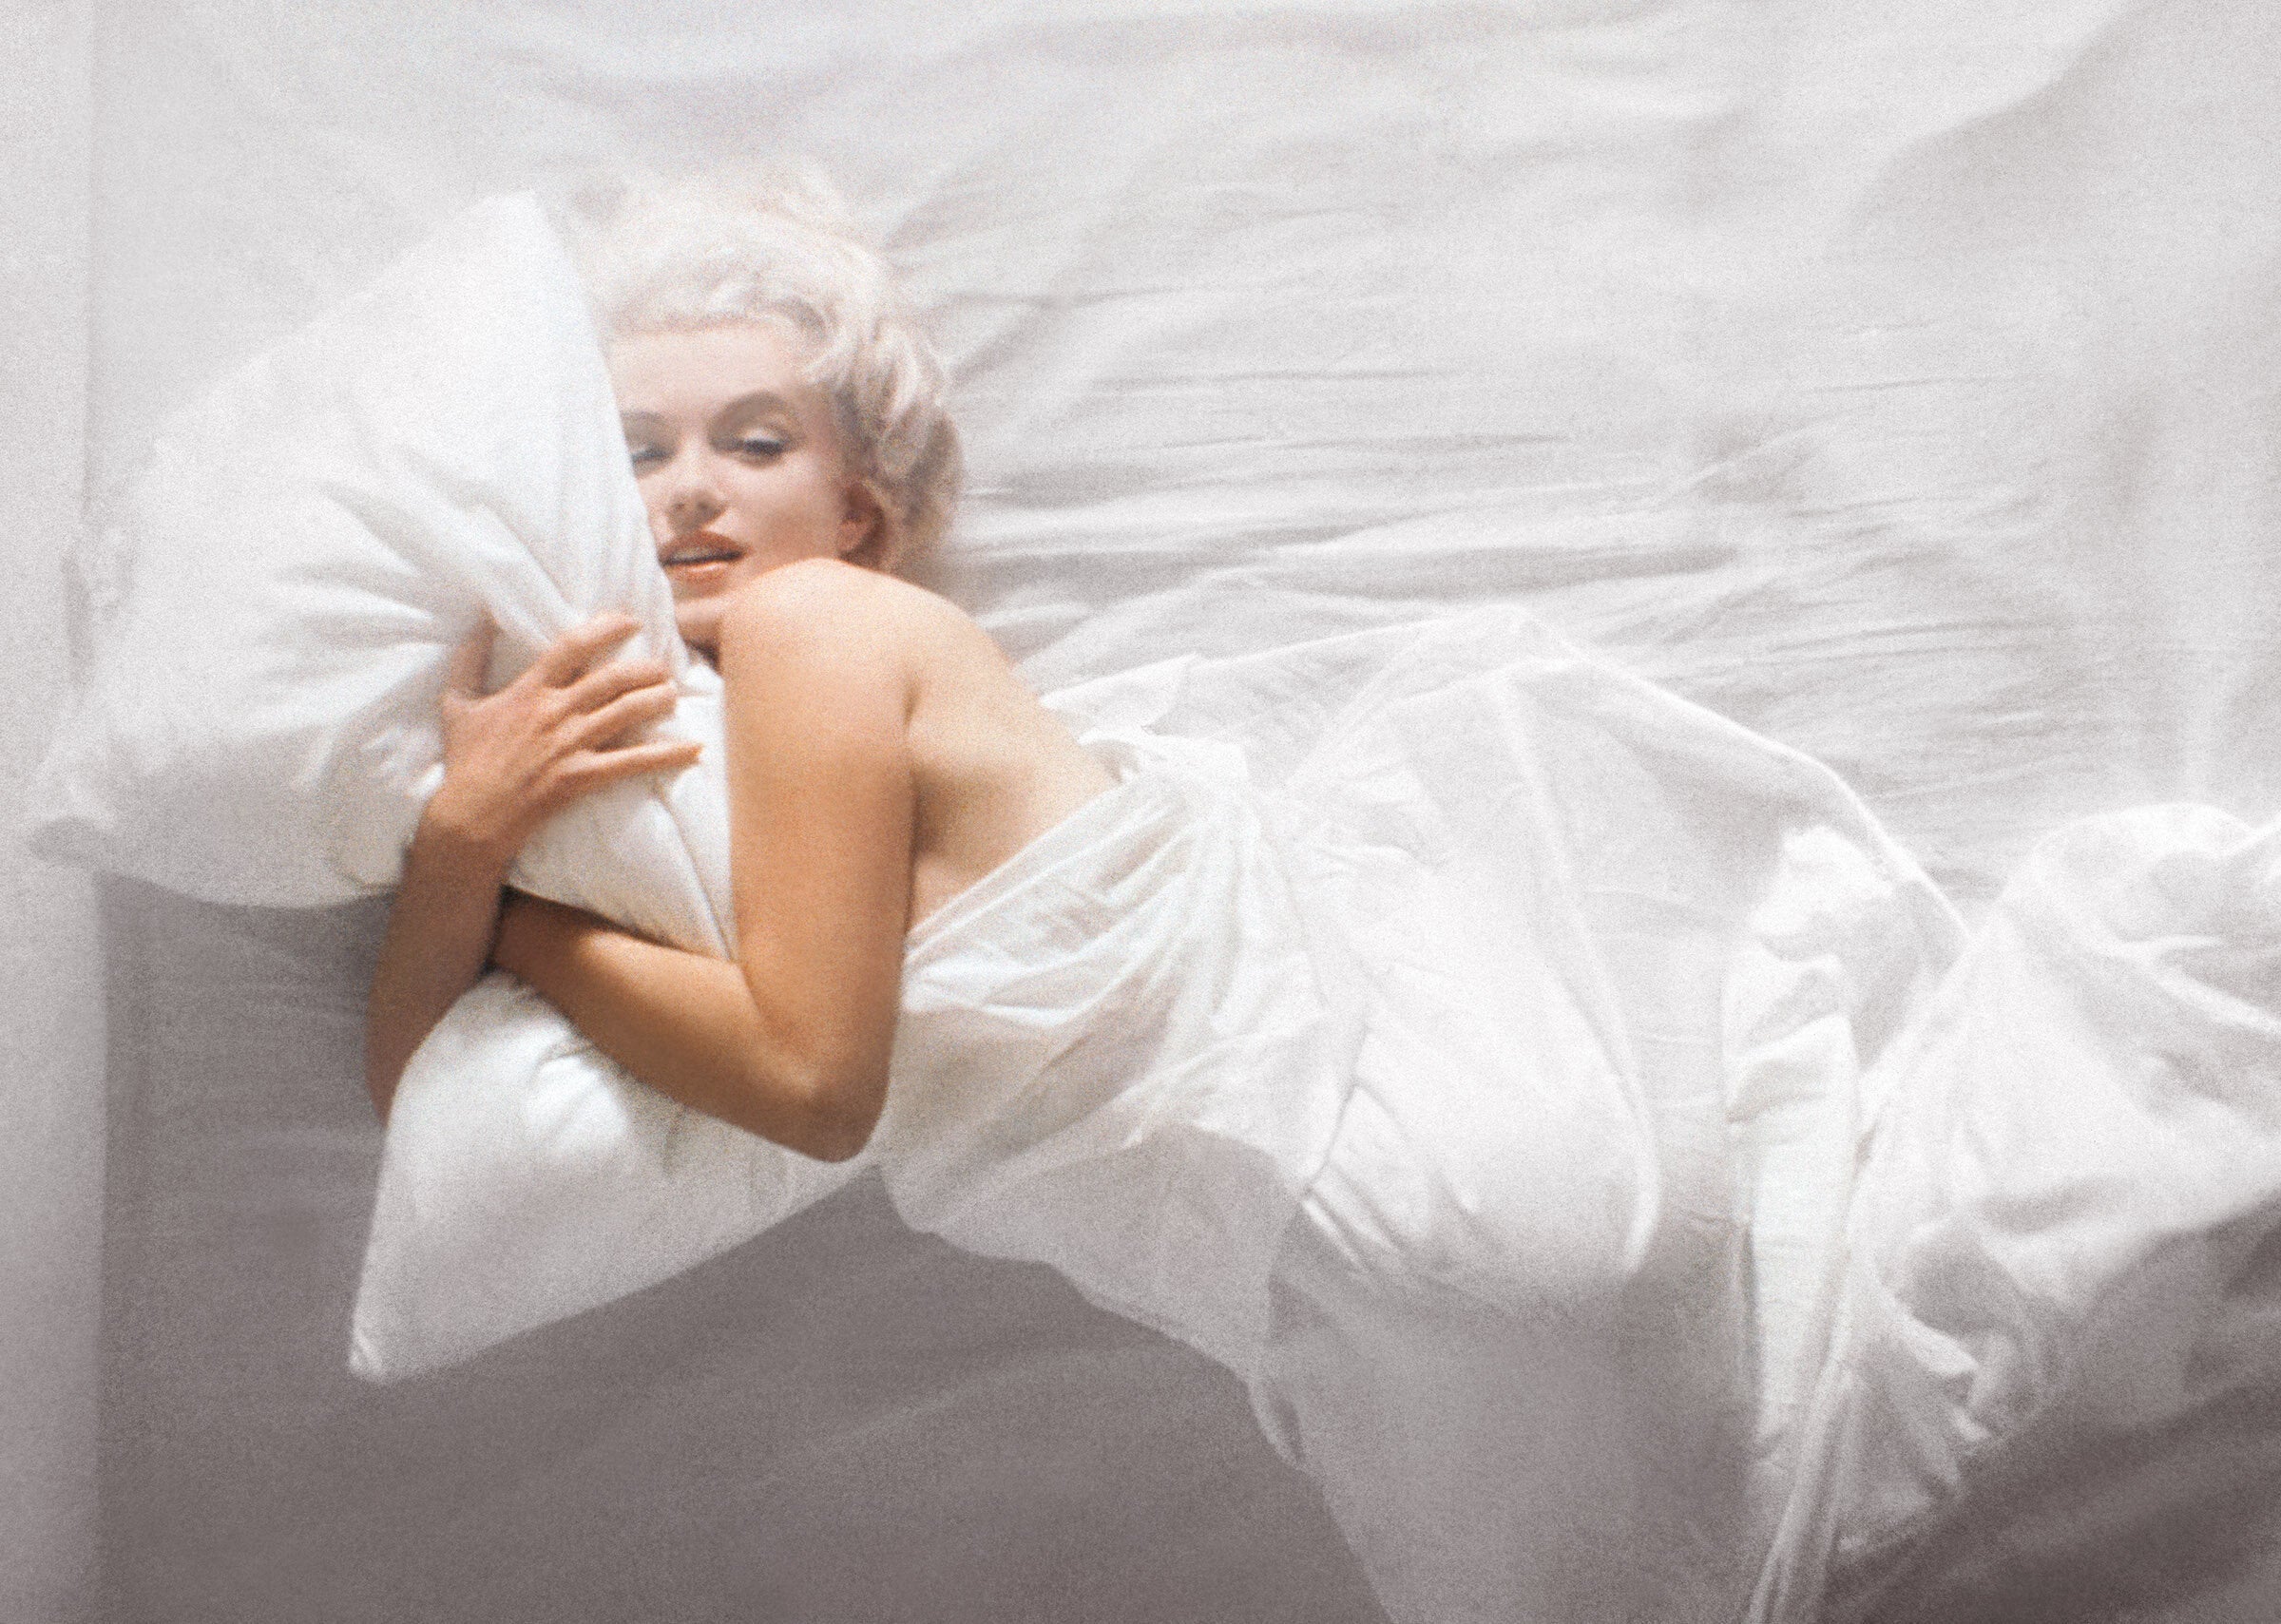 How did Marilyn Monroe die? The details behind the mysterious